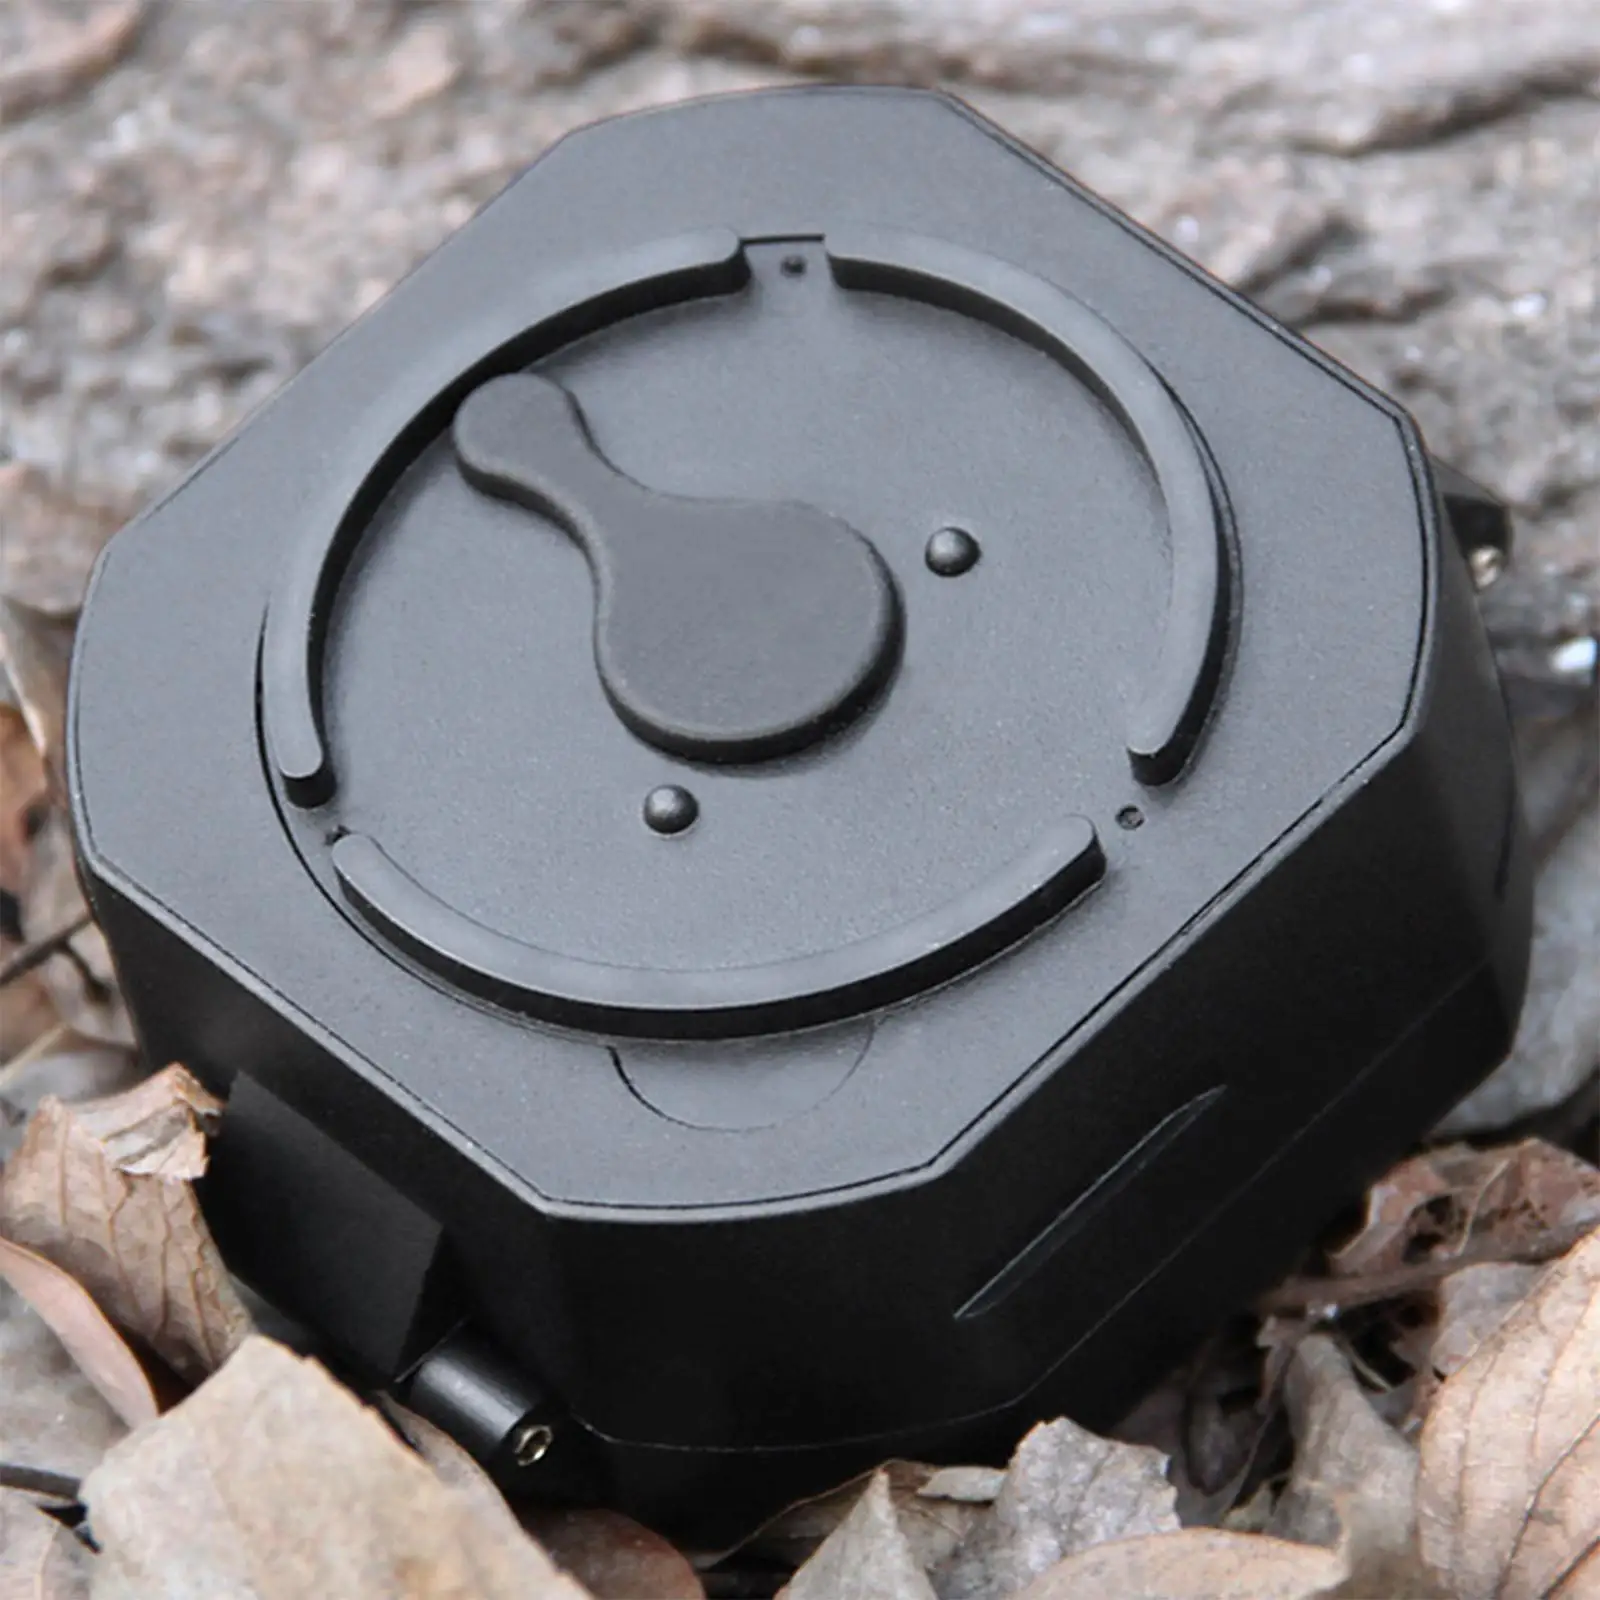 Portable Geology Lensatic Lightweigh for Outdoor Activities